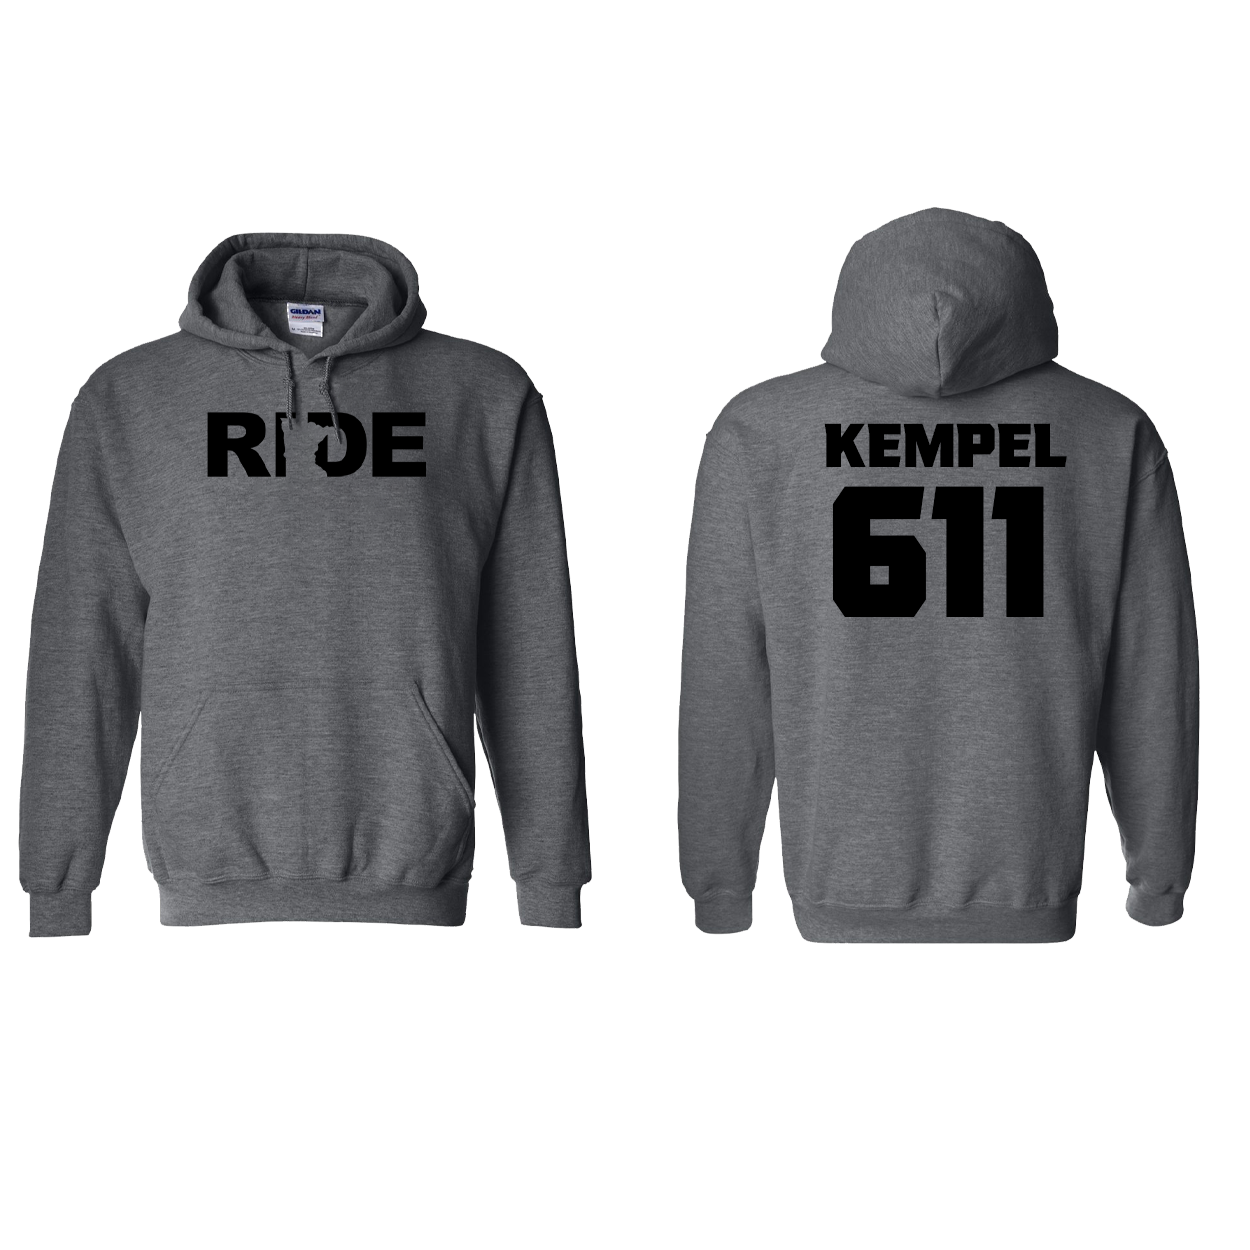 FXR BMX Race Team Classic Athlete Support Sweatshirt KEMPEL #611 Dark Heather (Black Logo)